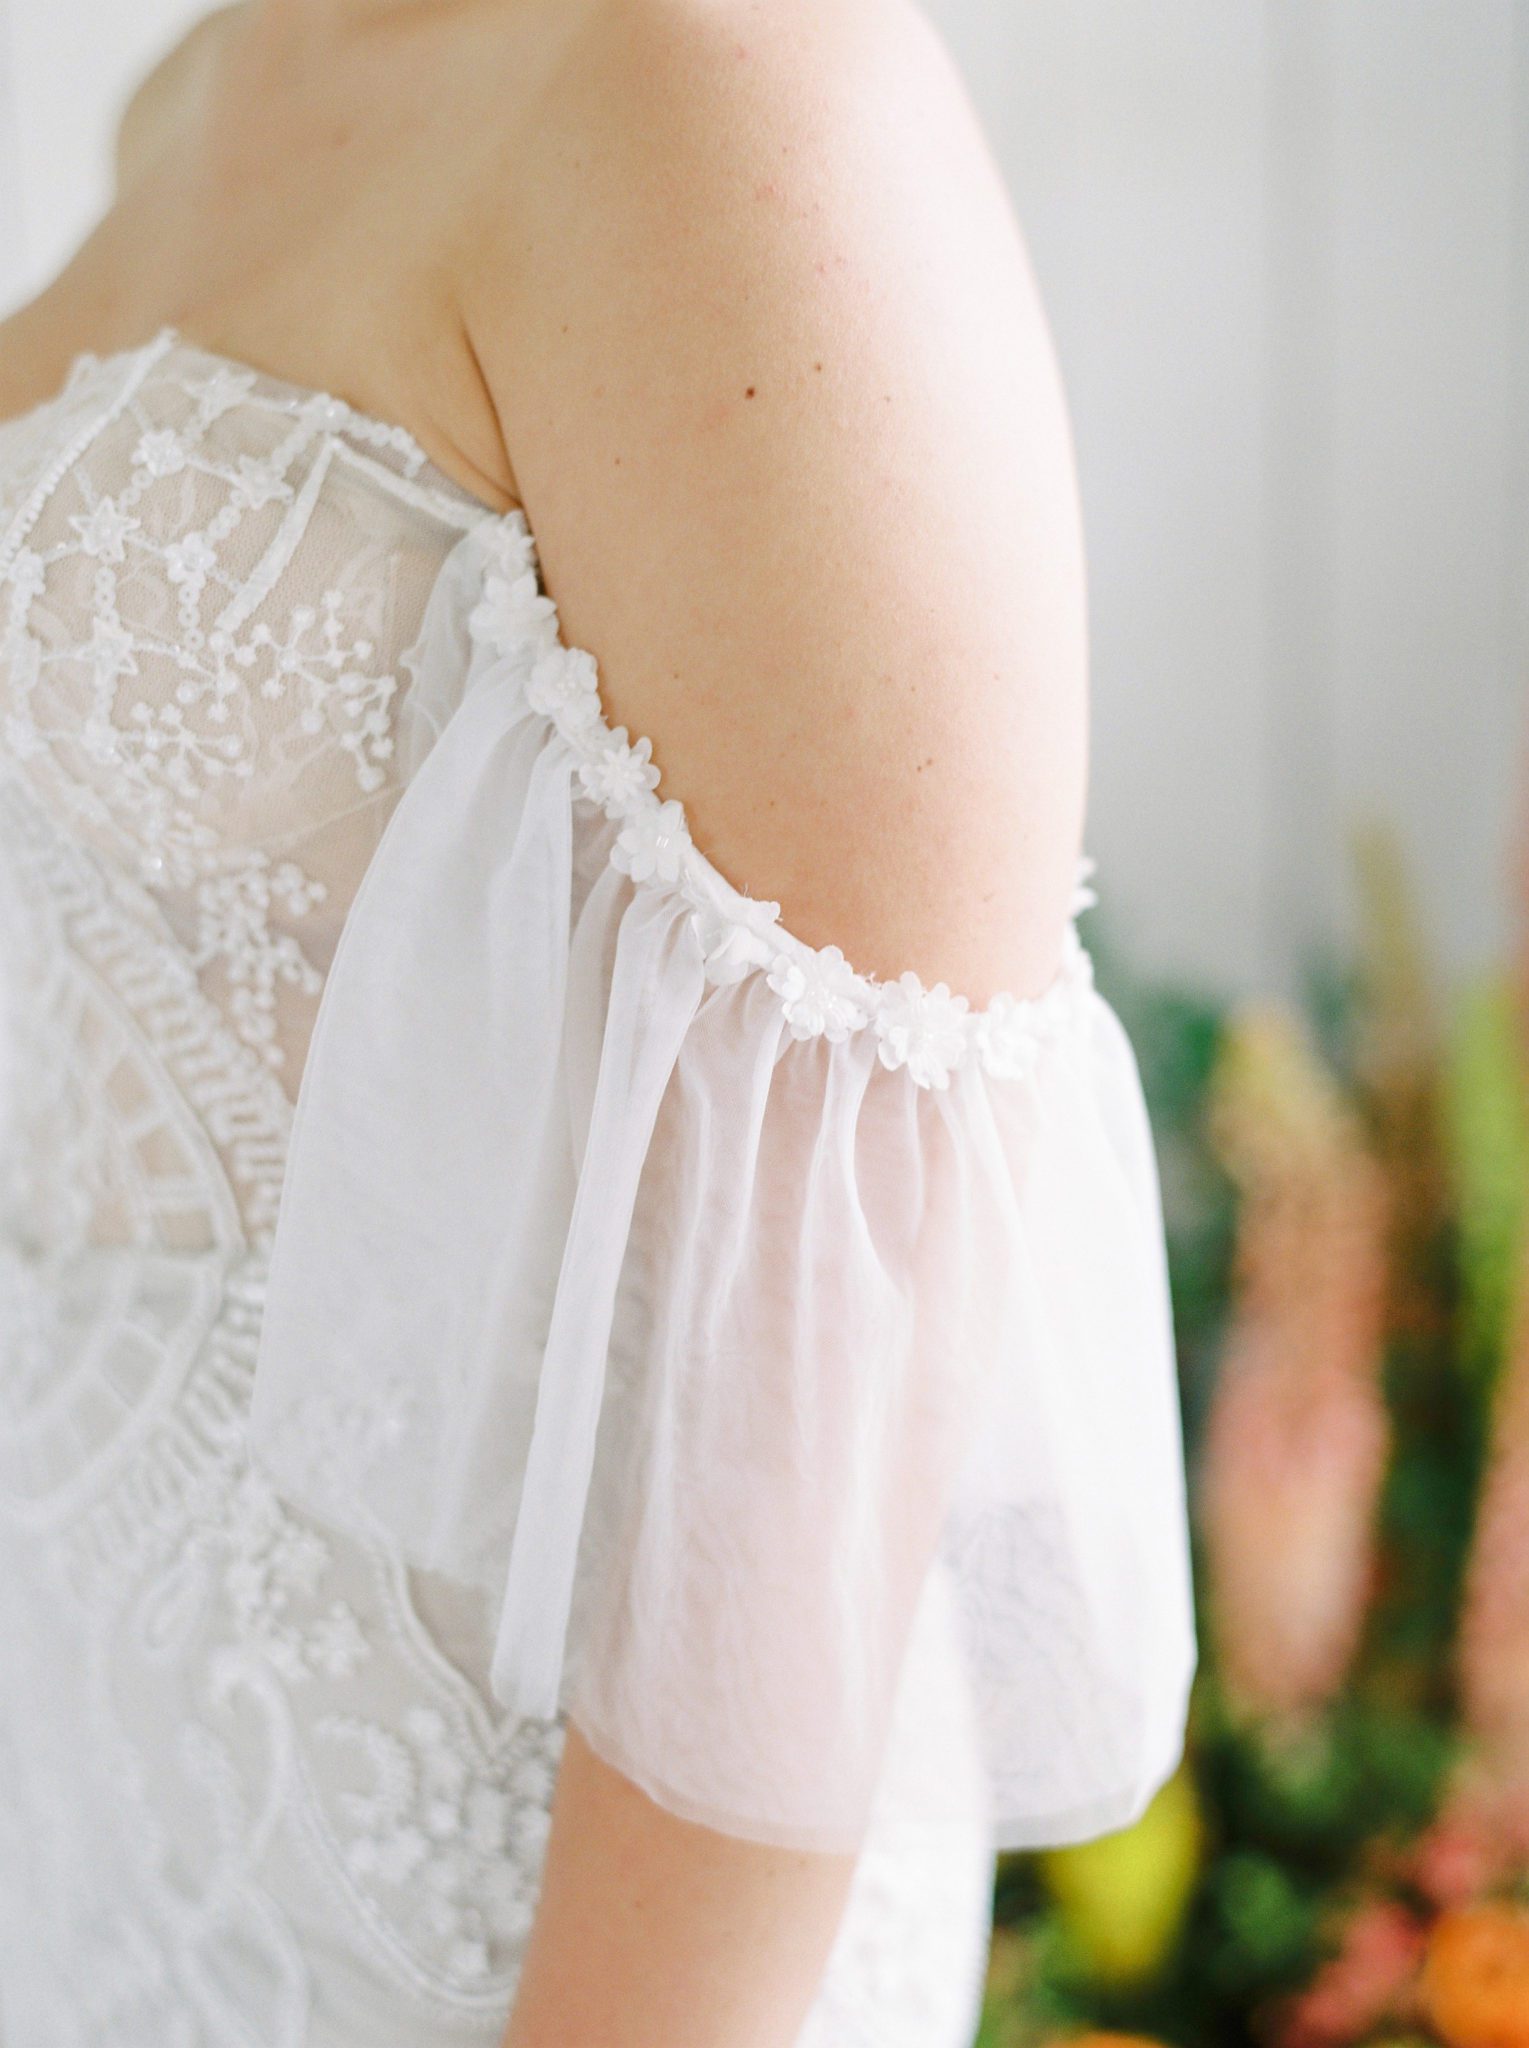 Farmhouse Chic: A Vibrant Wedding Inspiration Shoot at the Gathered | Brontë Bride Blog - Bride Getting Ready